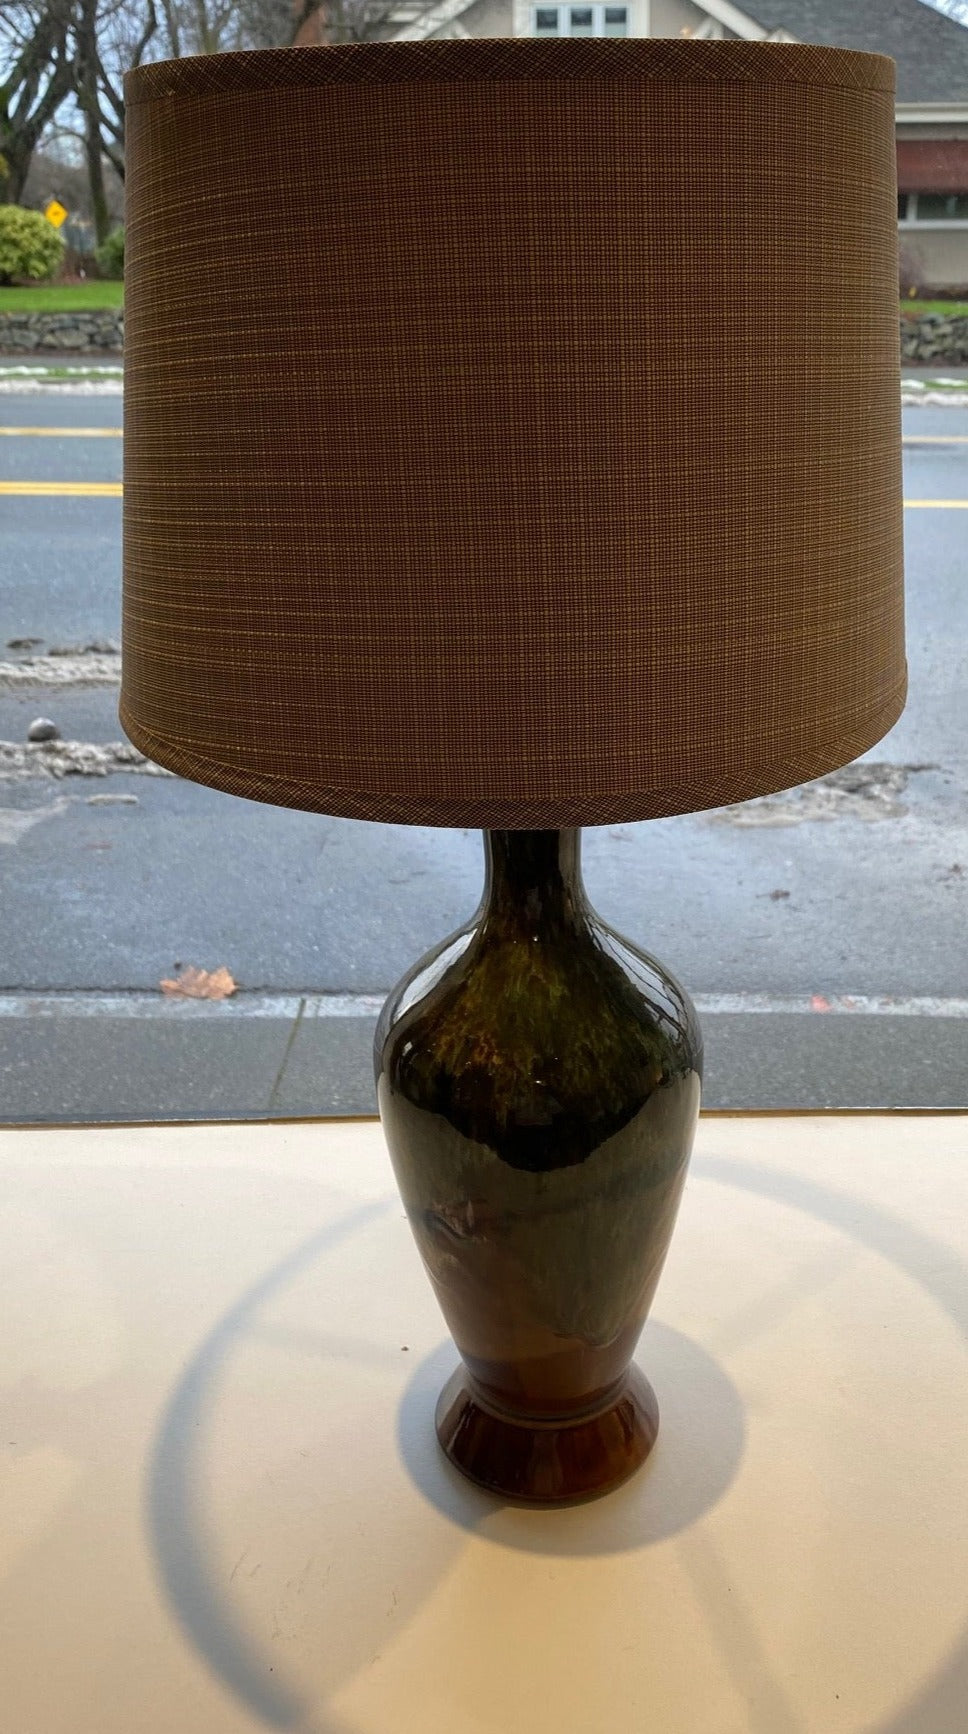 Green Vintage Ceramic Table Lamp - Cook Street Vintage